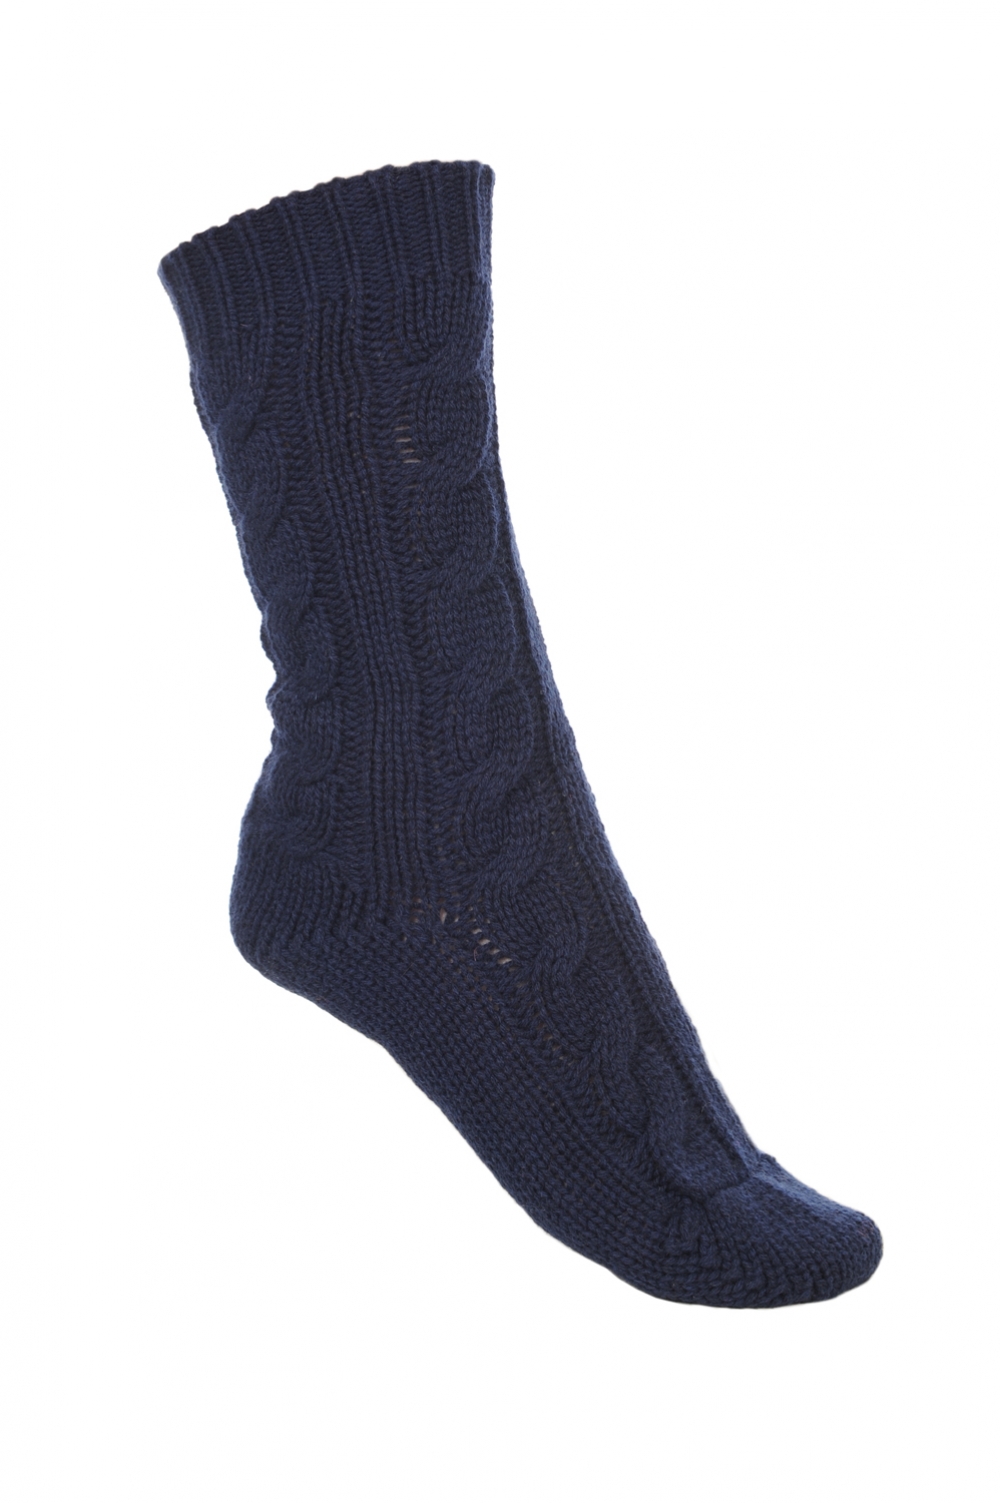 Cashmere accessories socks pedibus dress blue 37 41